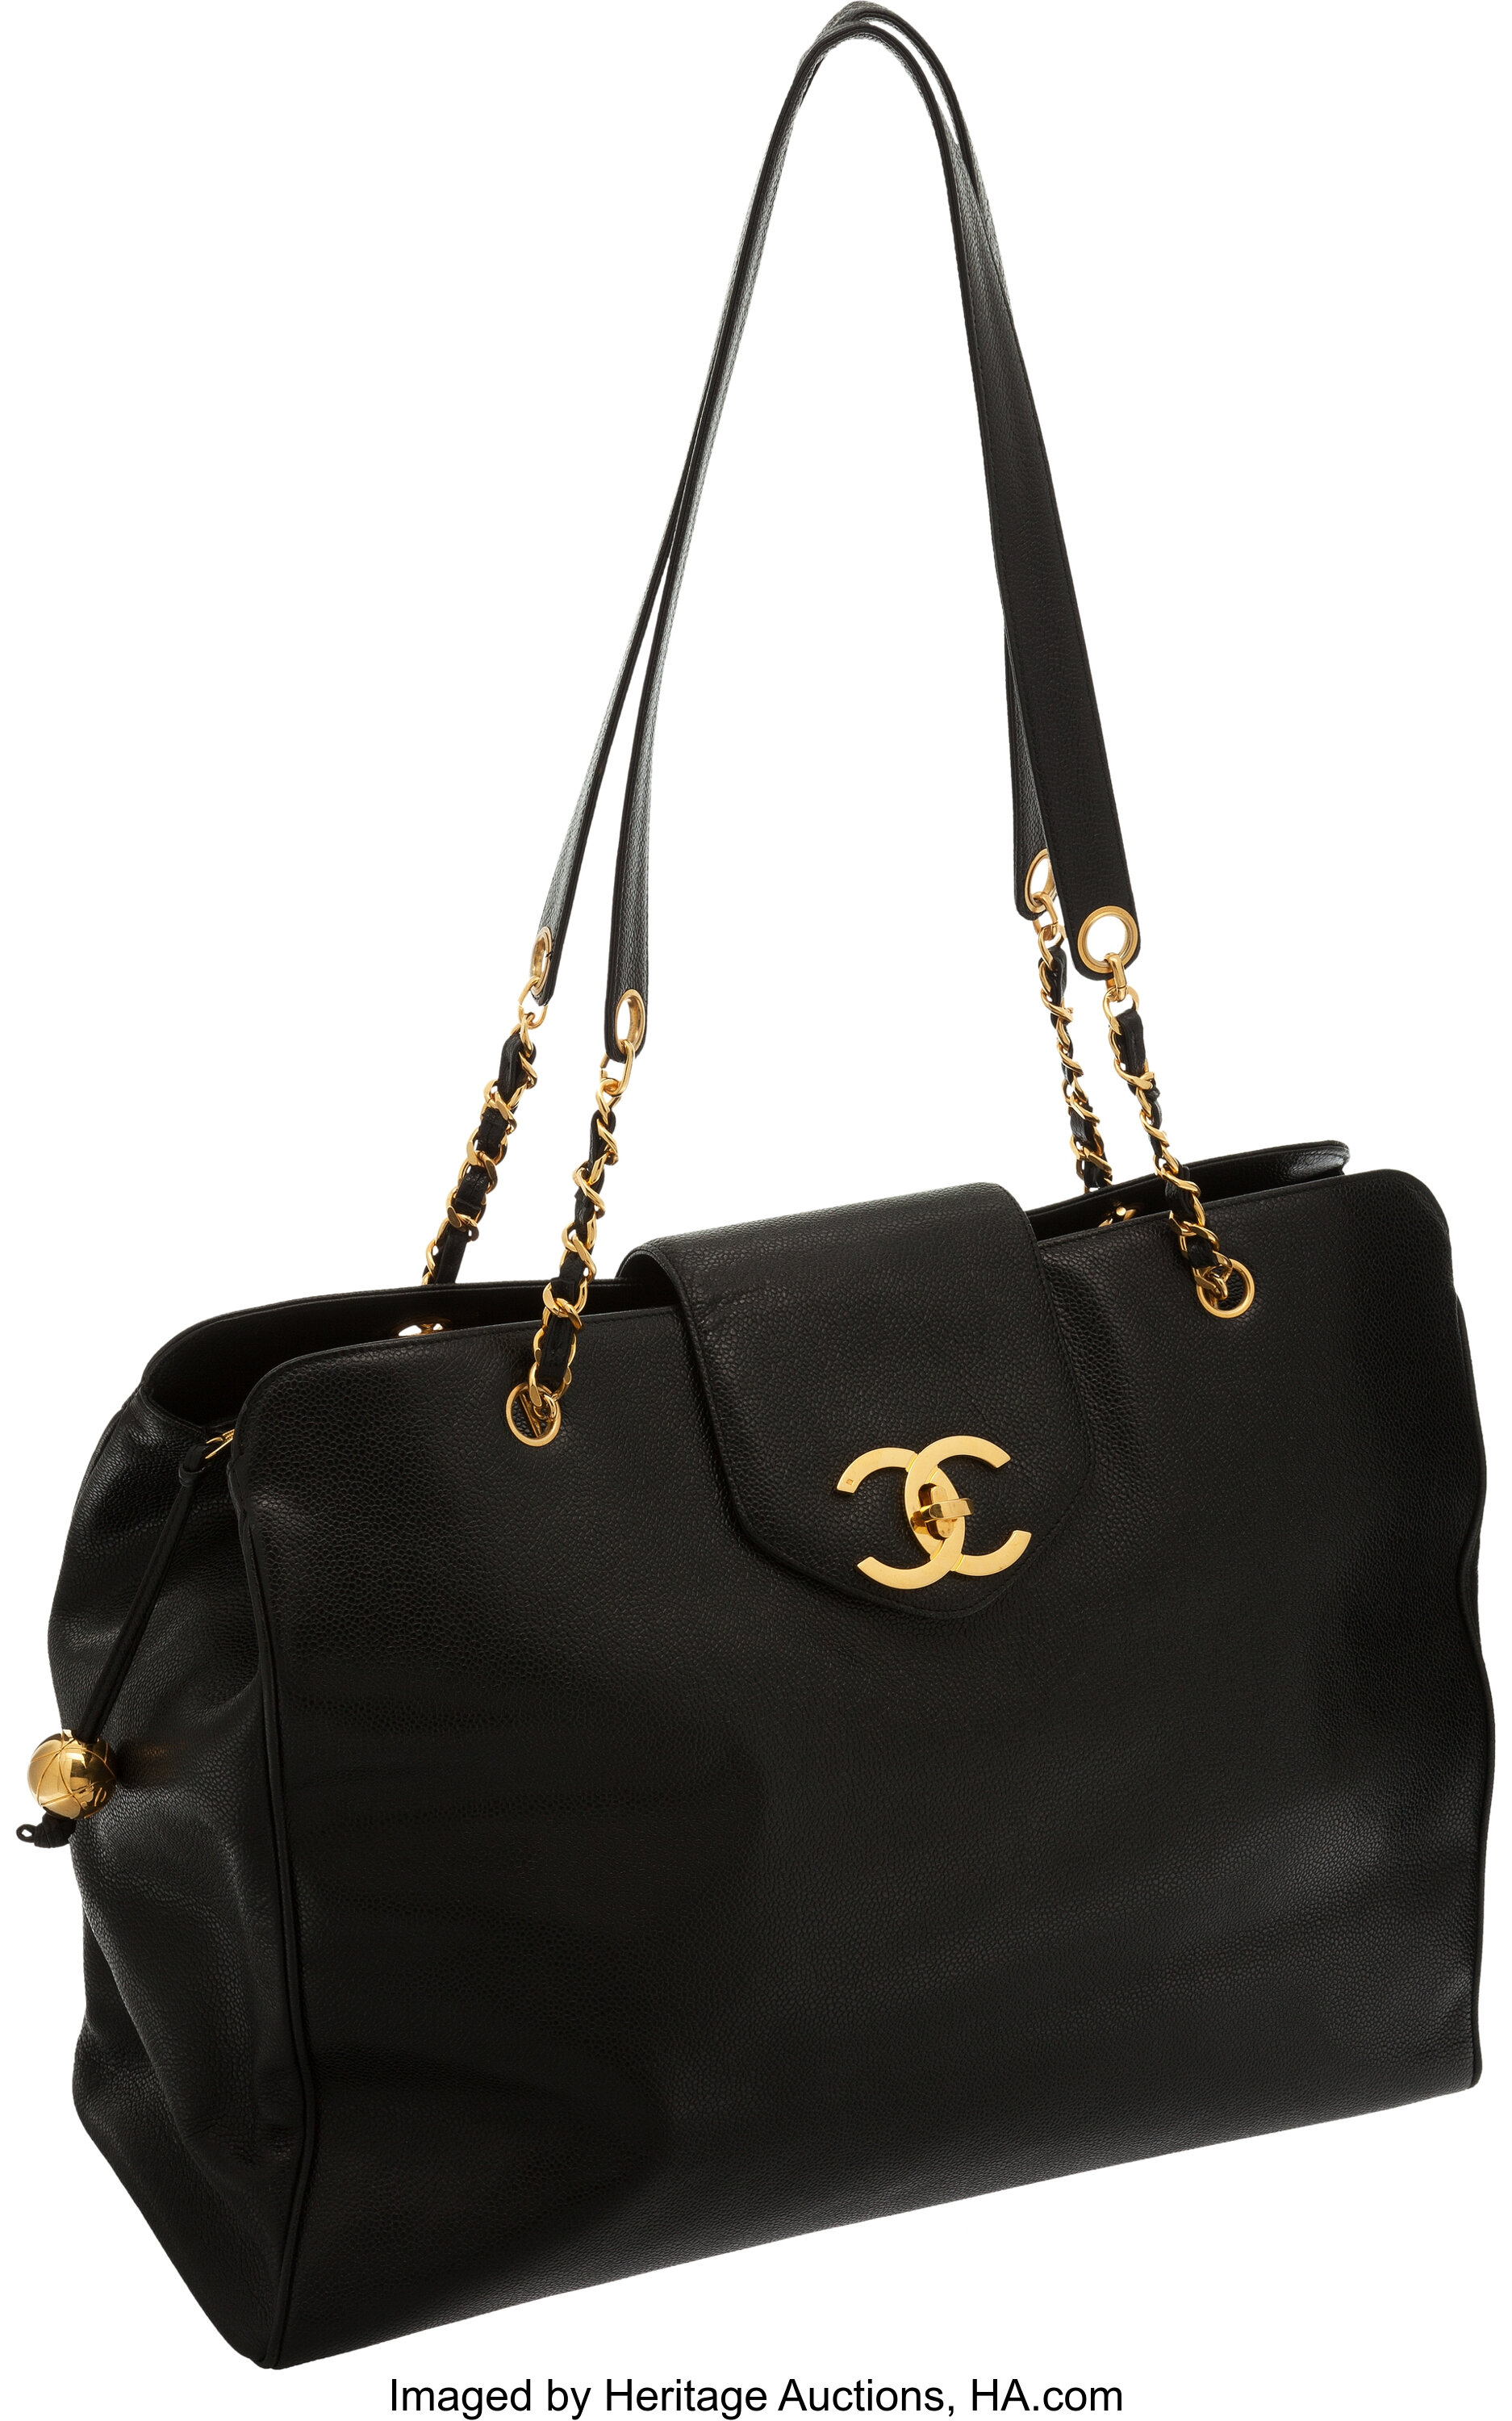 Chanel Rare Black Caviar Leather Large Supermodel Weekender Bag